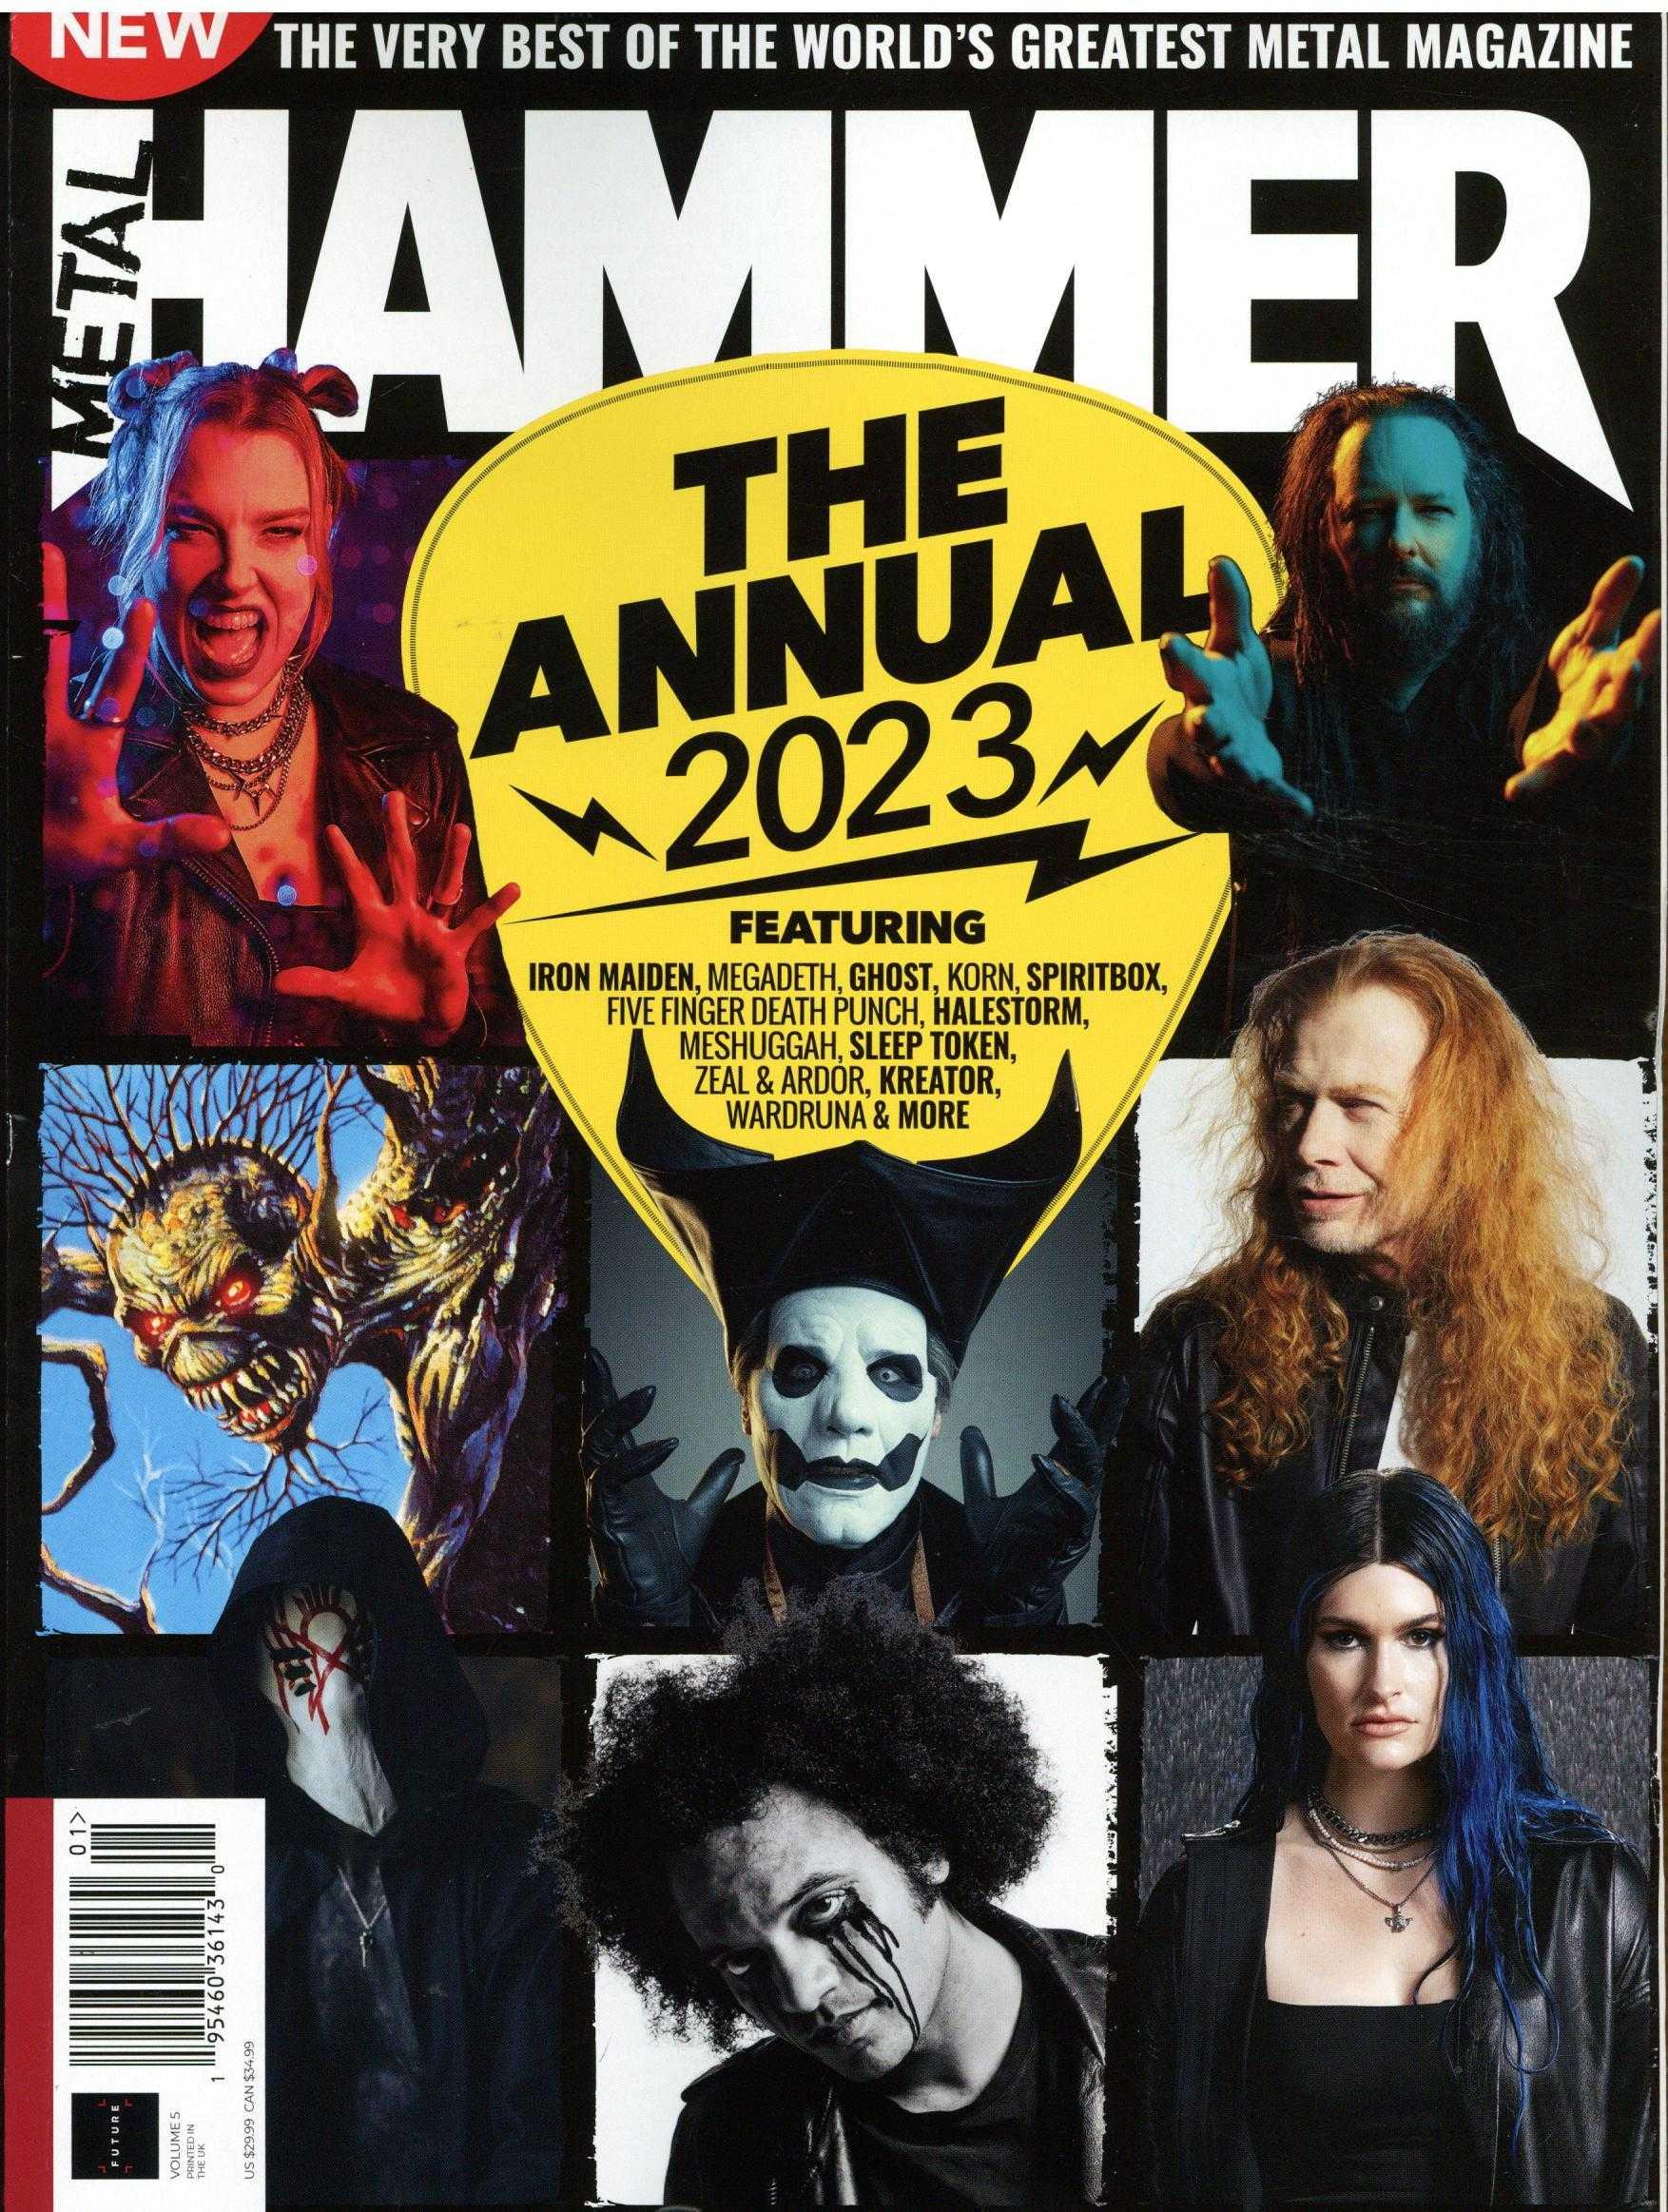 Metal Hammer Presents